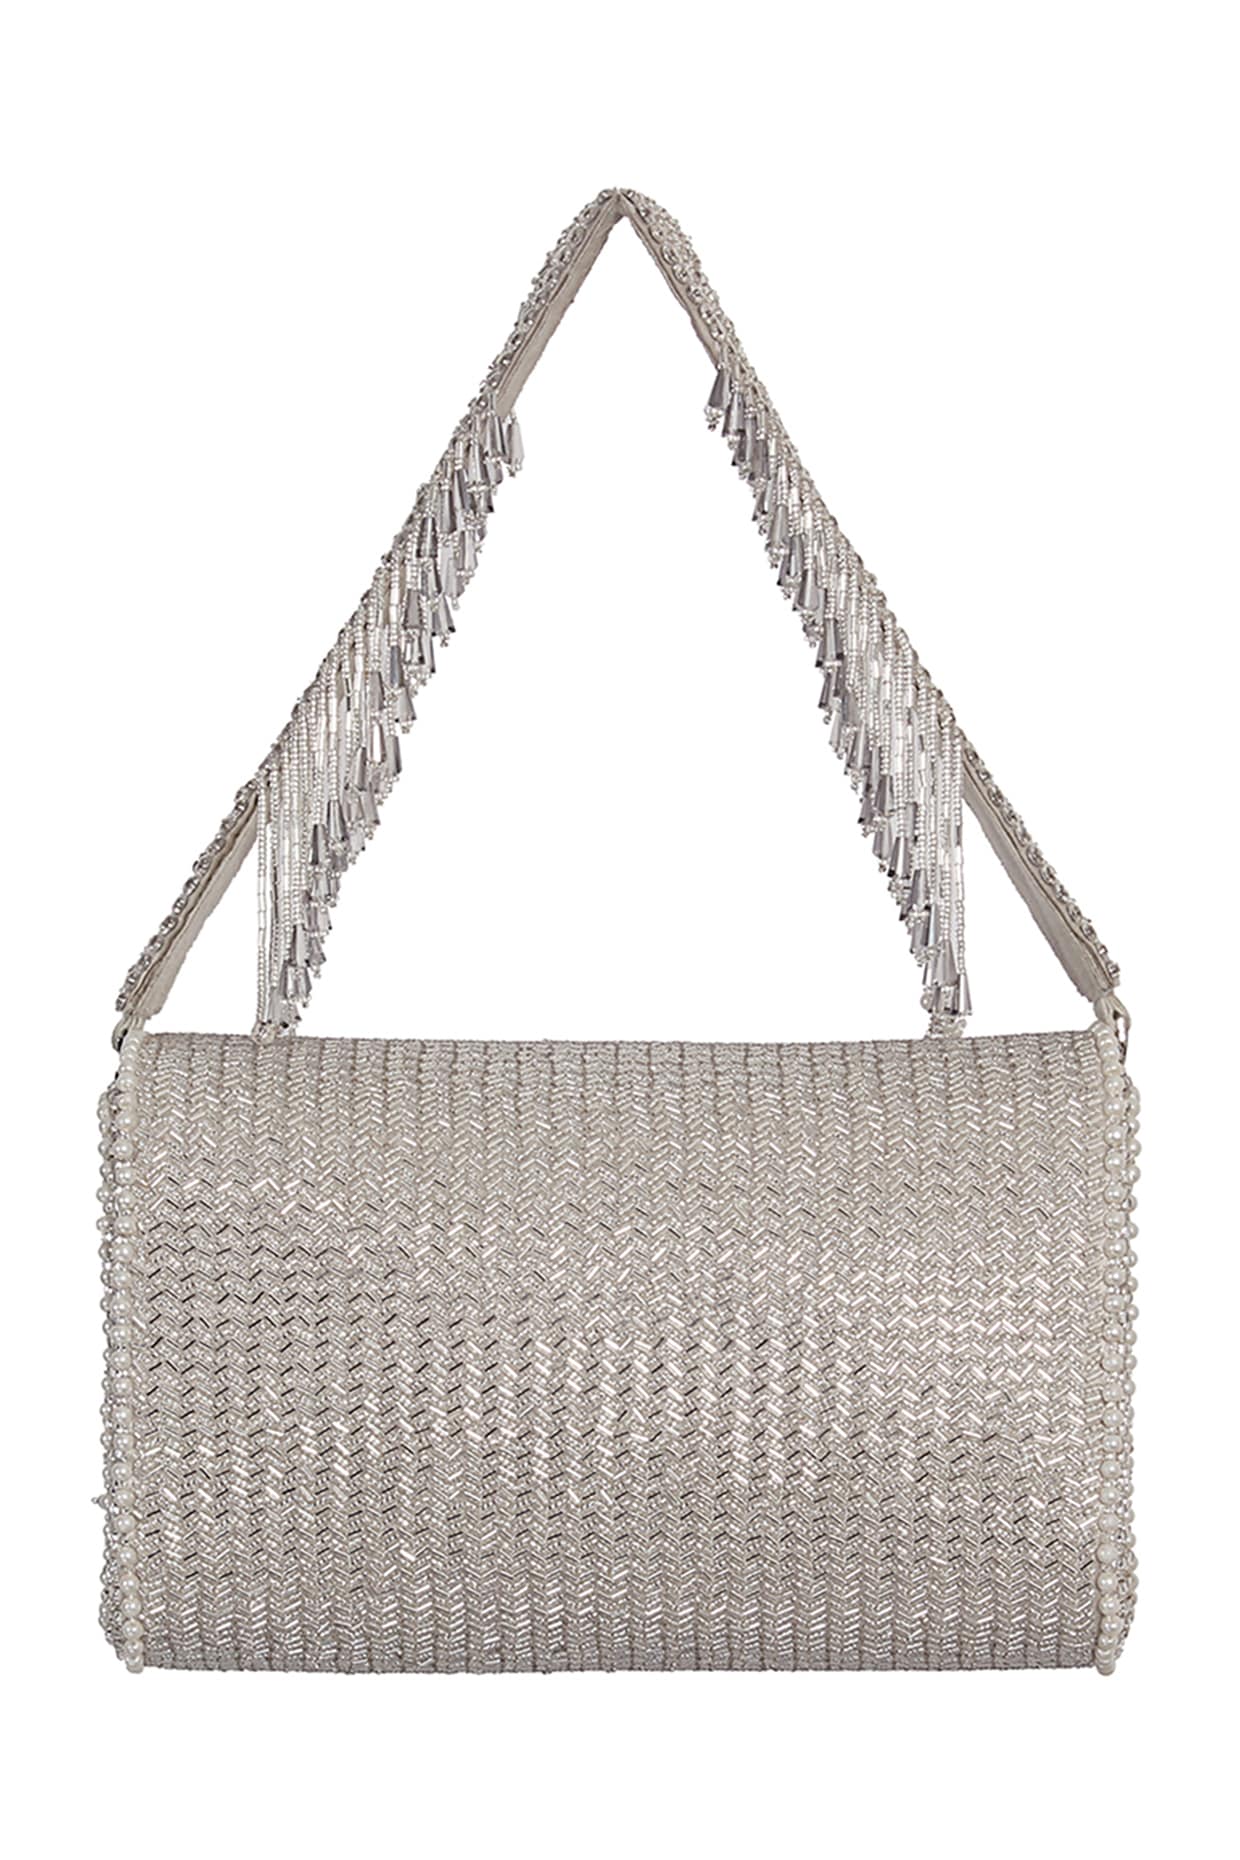 KATIE LOXTON Zara Metallic Silver Clutch Bag